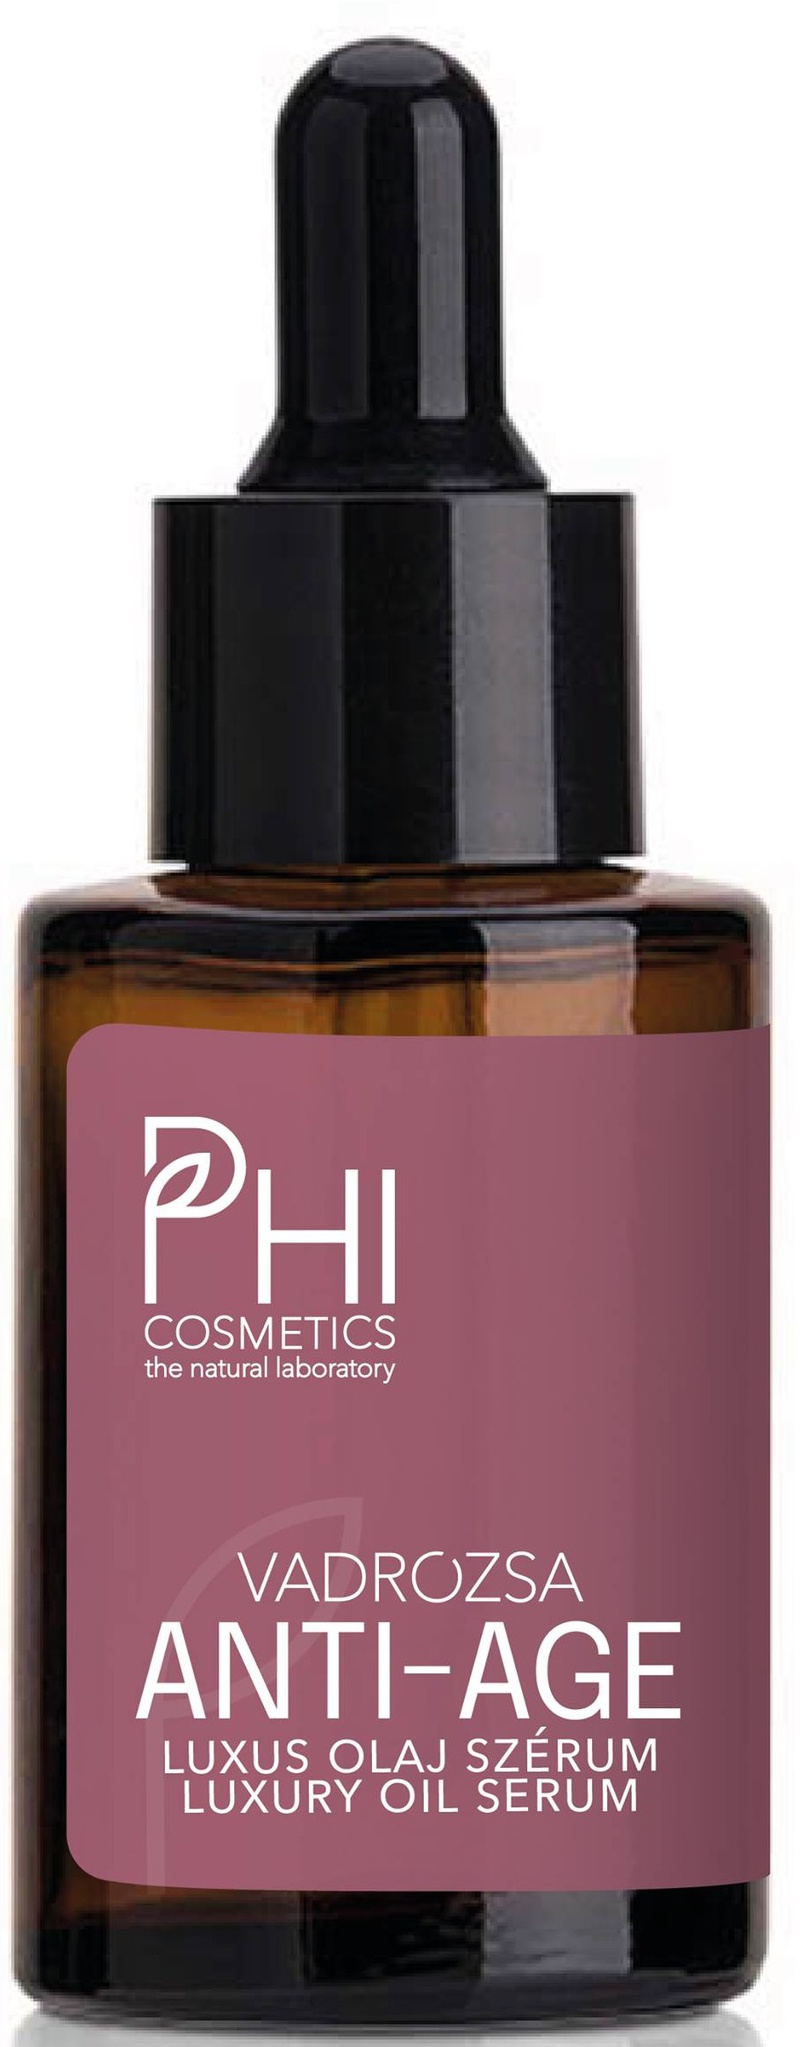 PHI Cosmetics Vadrózsa Anti-Age Luxury Oil Serum